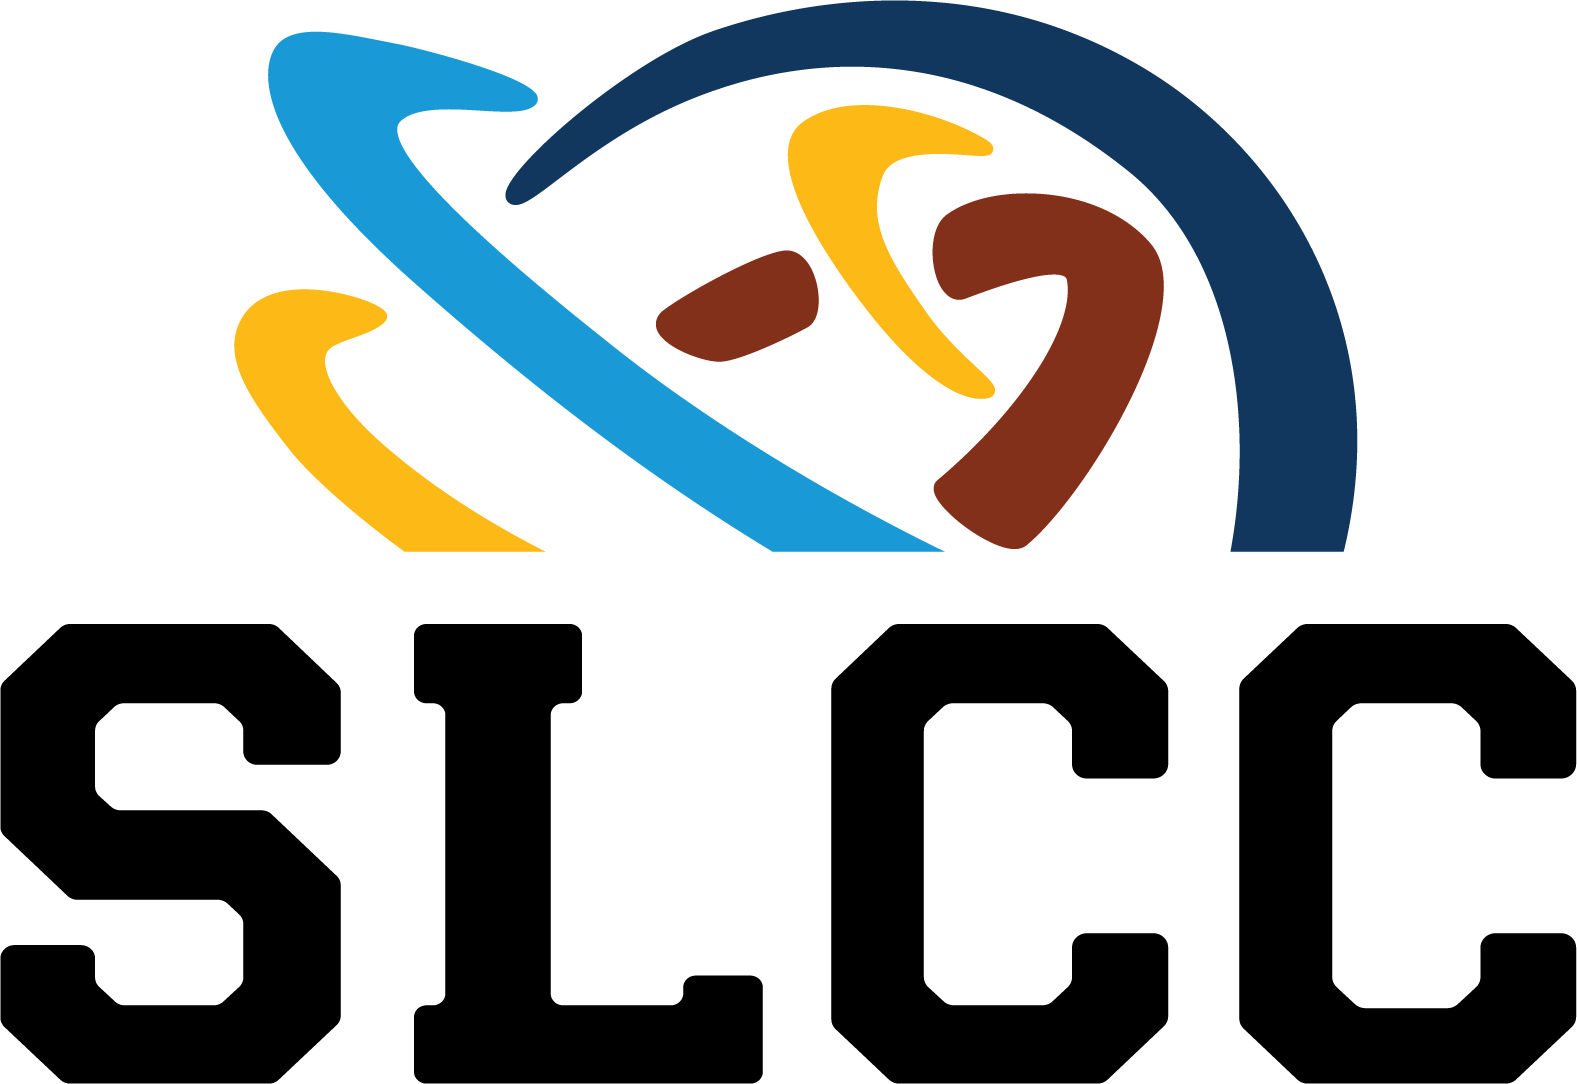 SLCC Logo